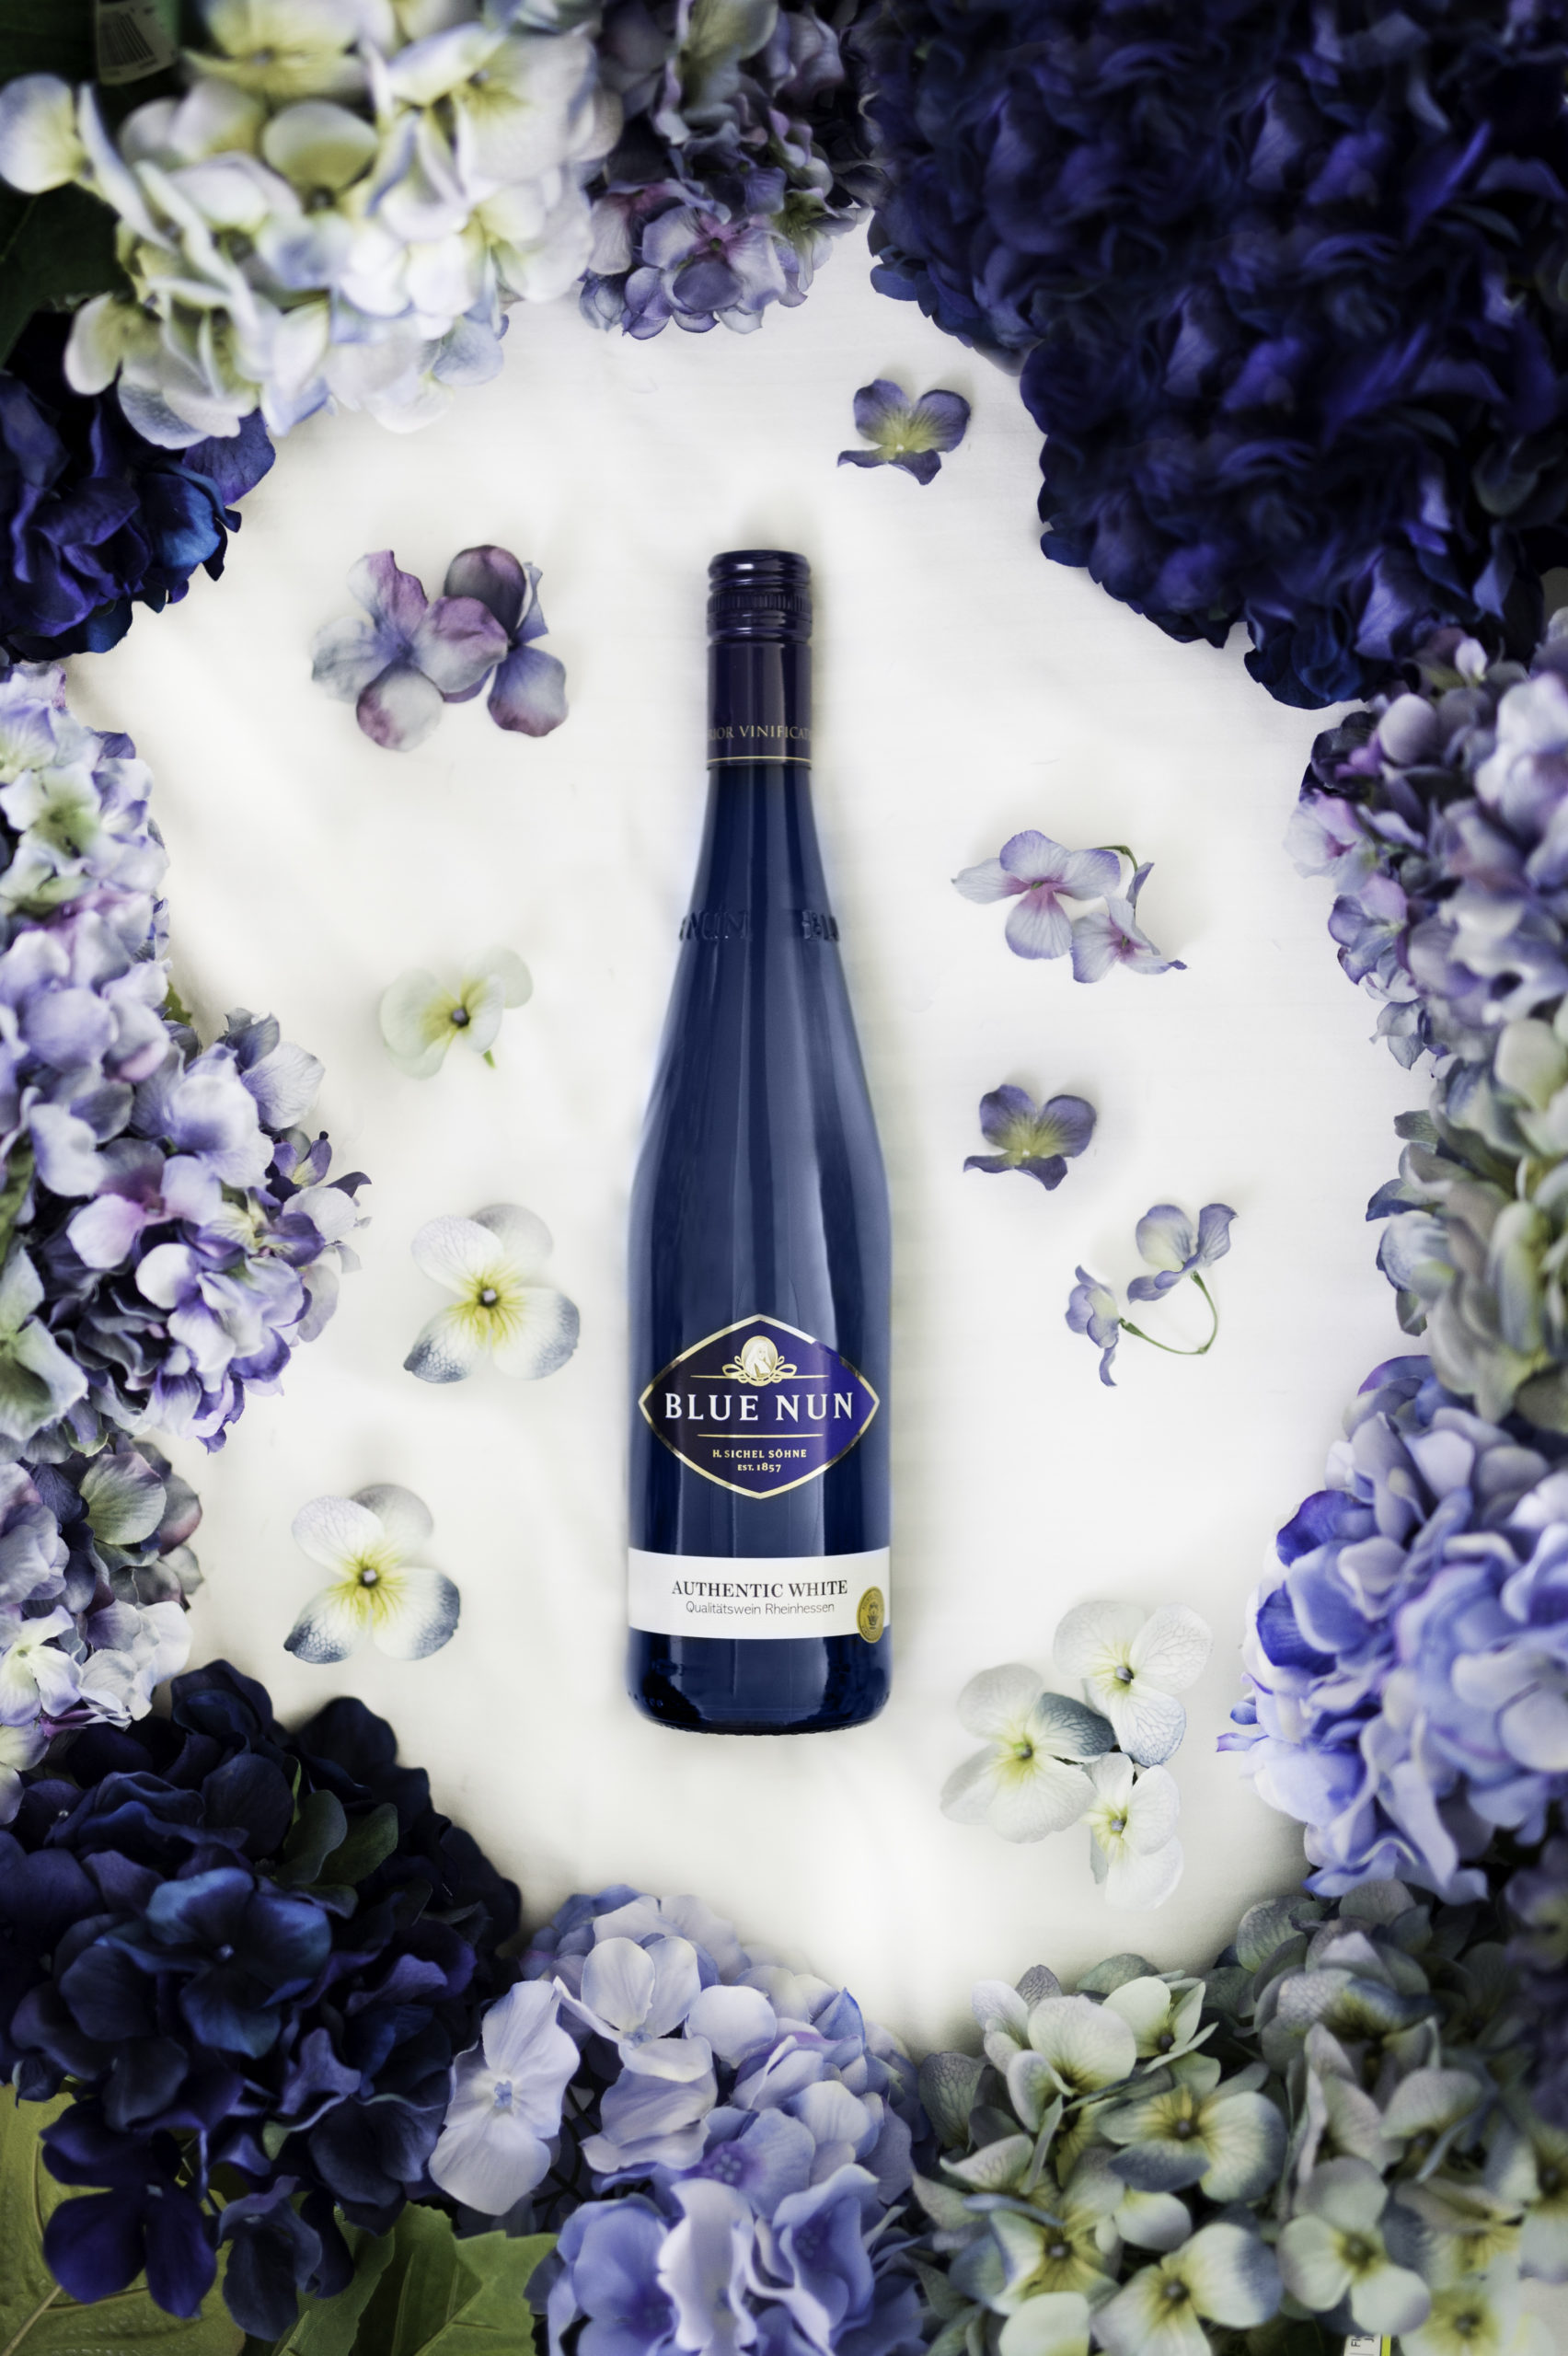 Purple wine bottle surrounded by flowers